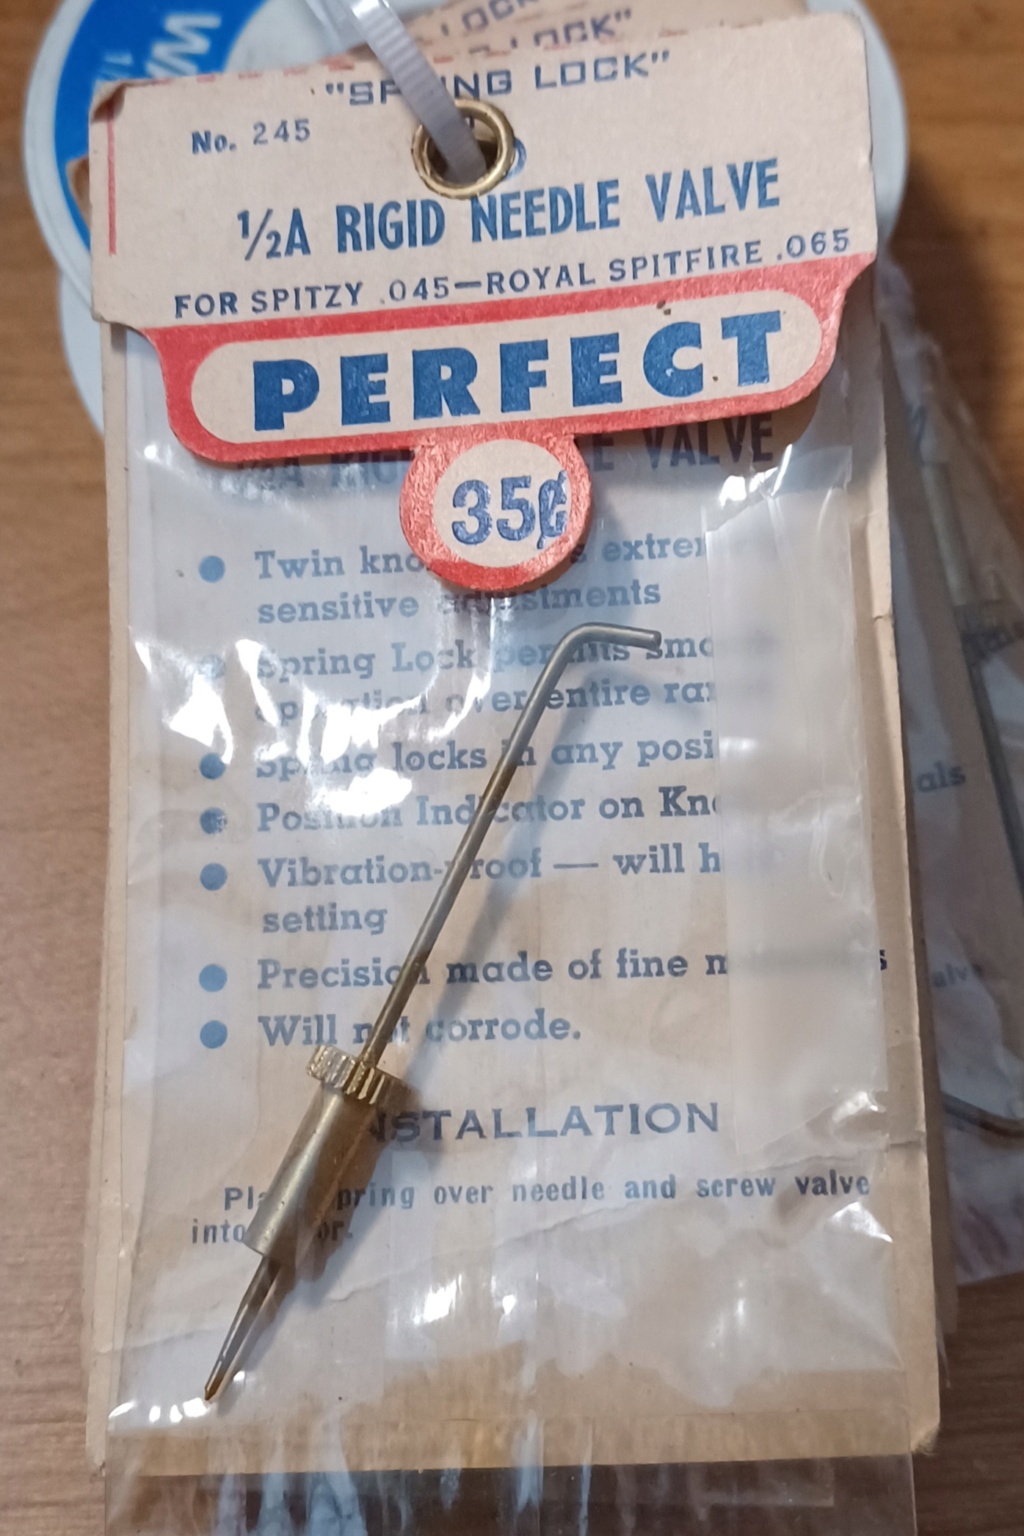   Perfect Brand Replacement Needle Valves Perfec14